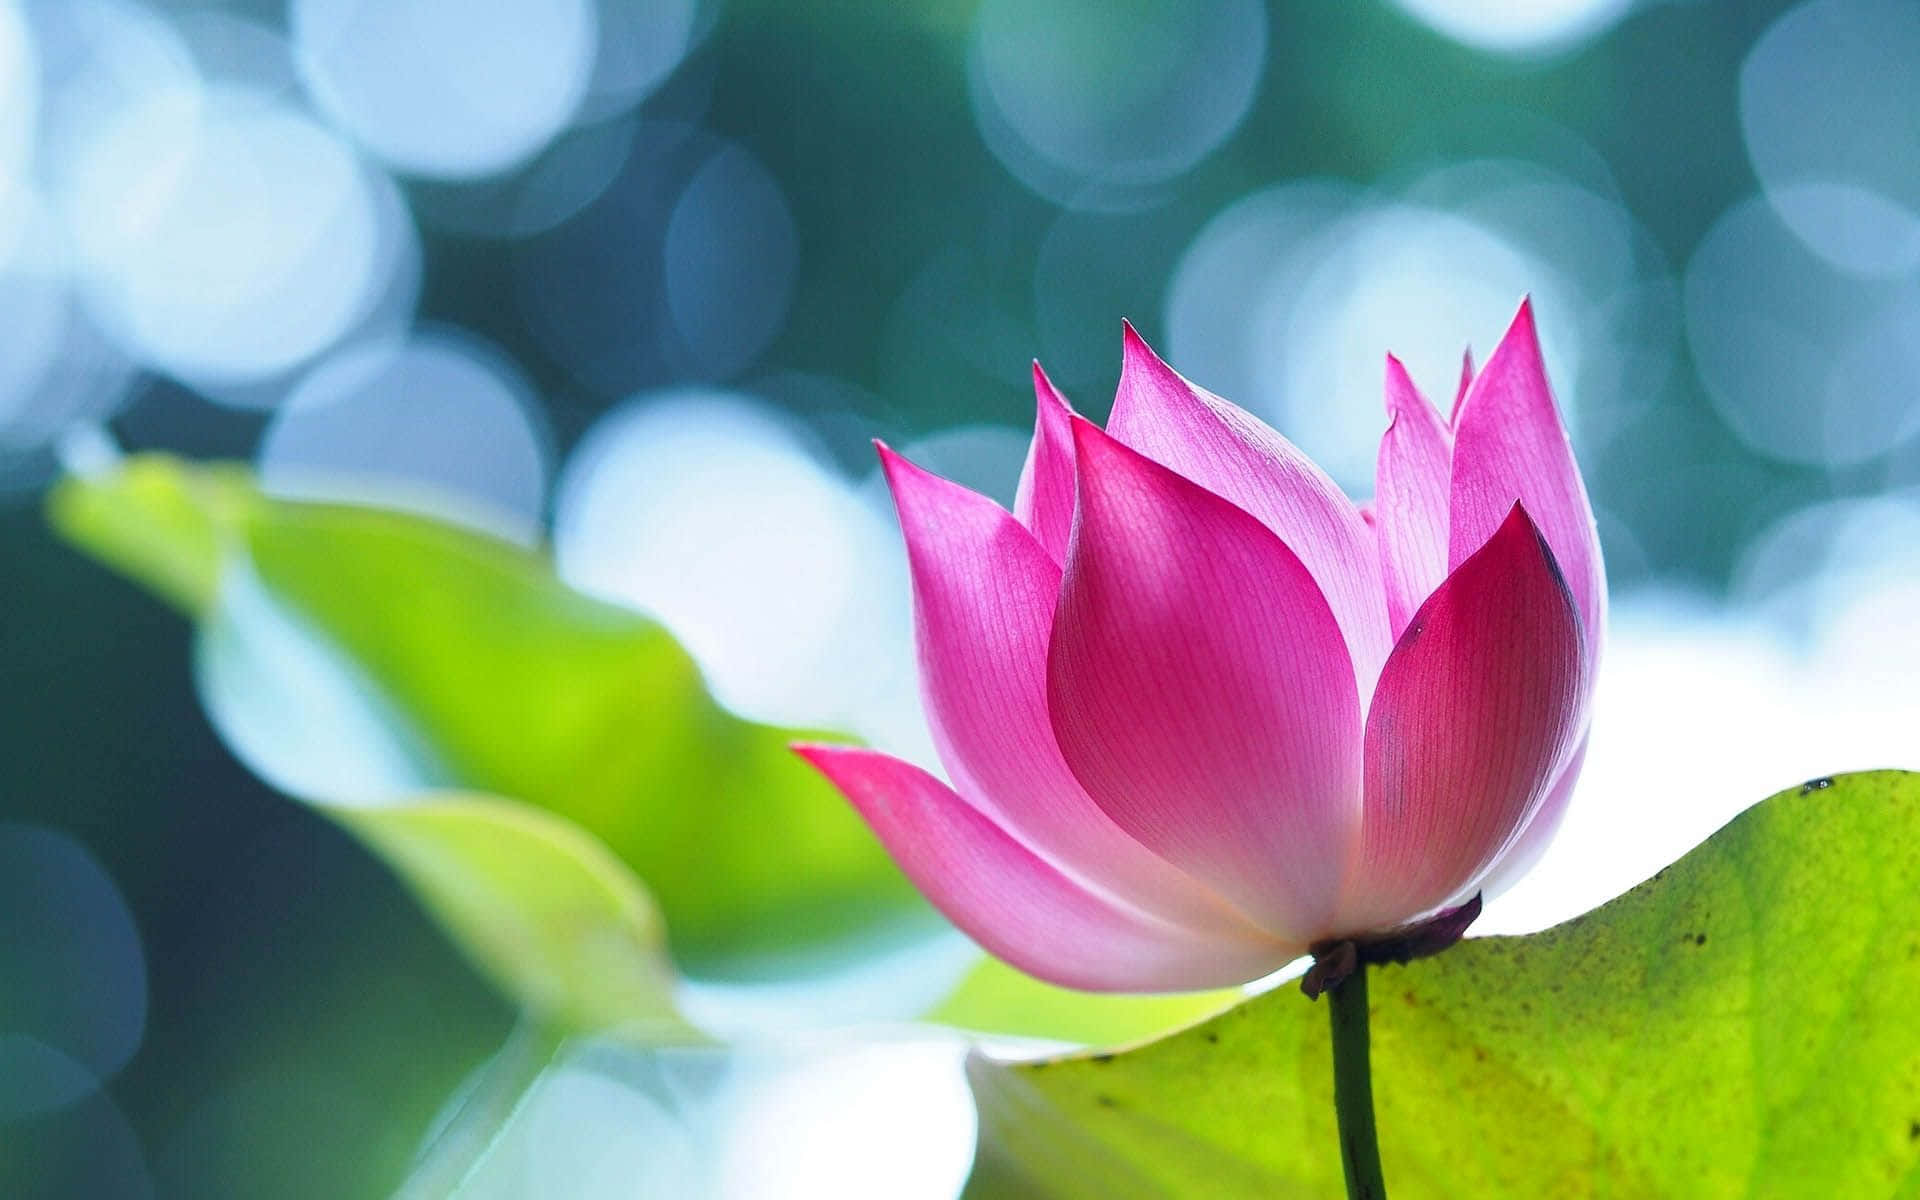 Striking Beauty of a Blooming Lotus